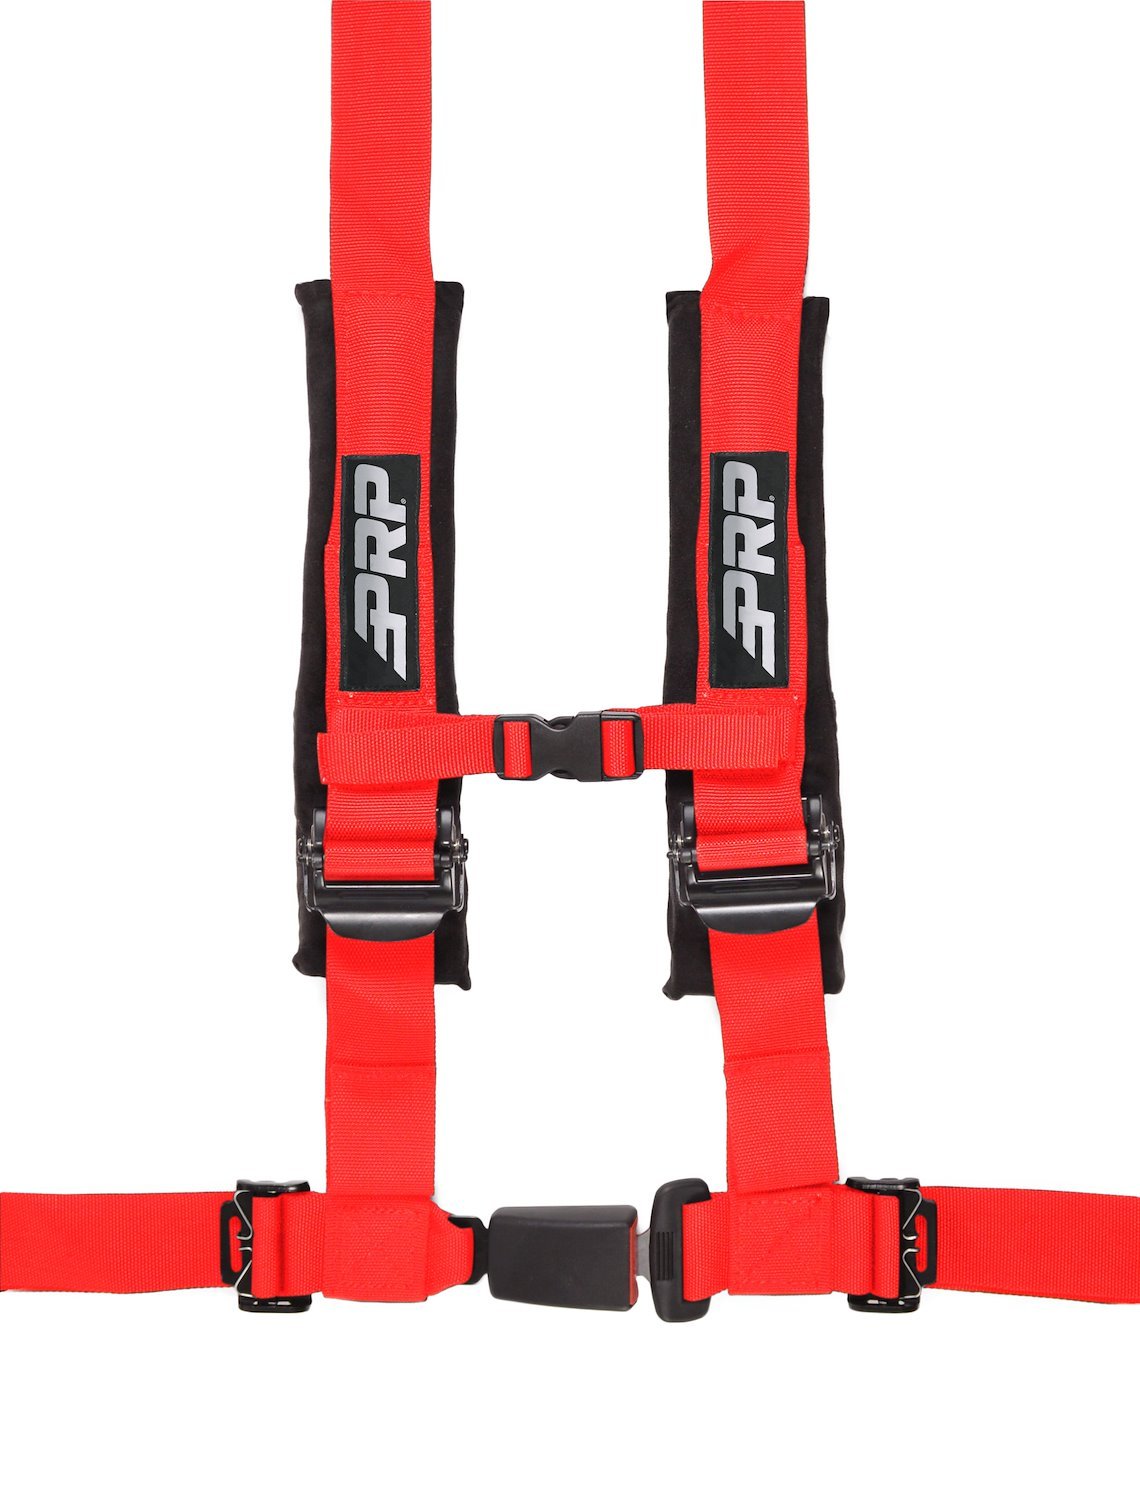 SBAUTO2R 4.2 Harness [Red]